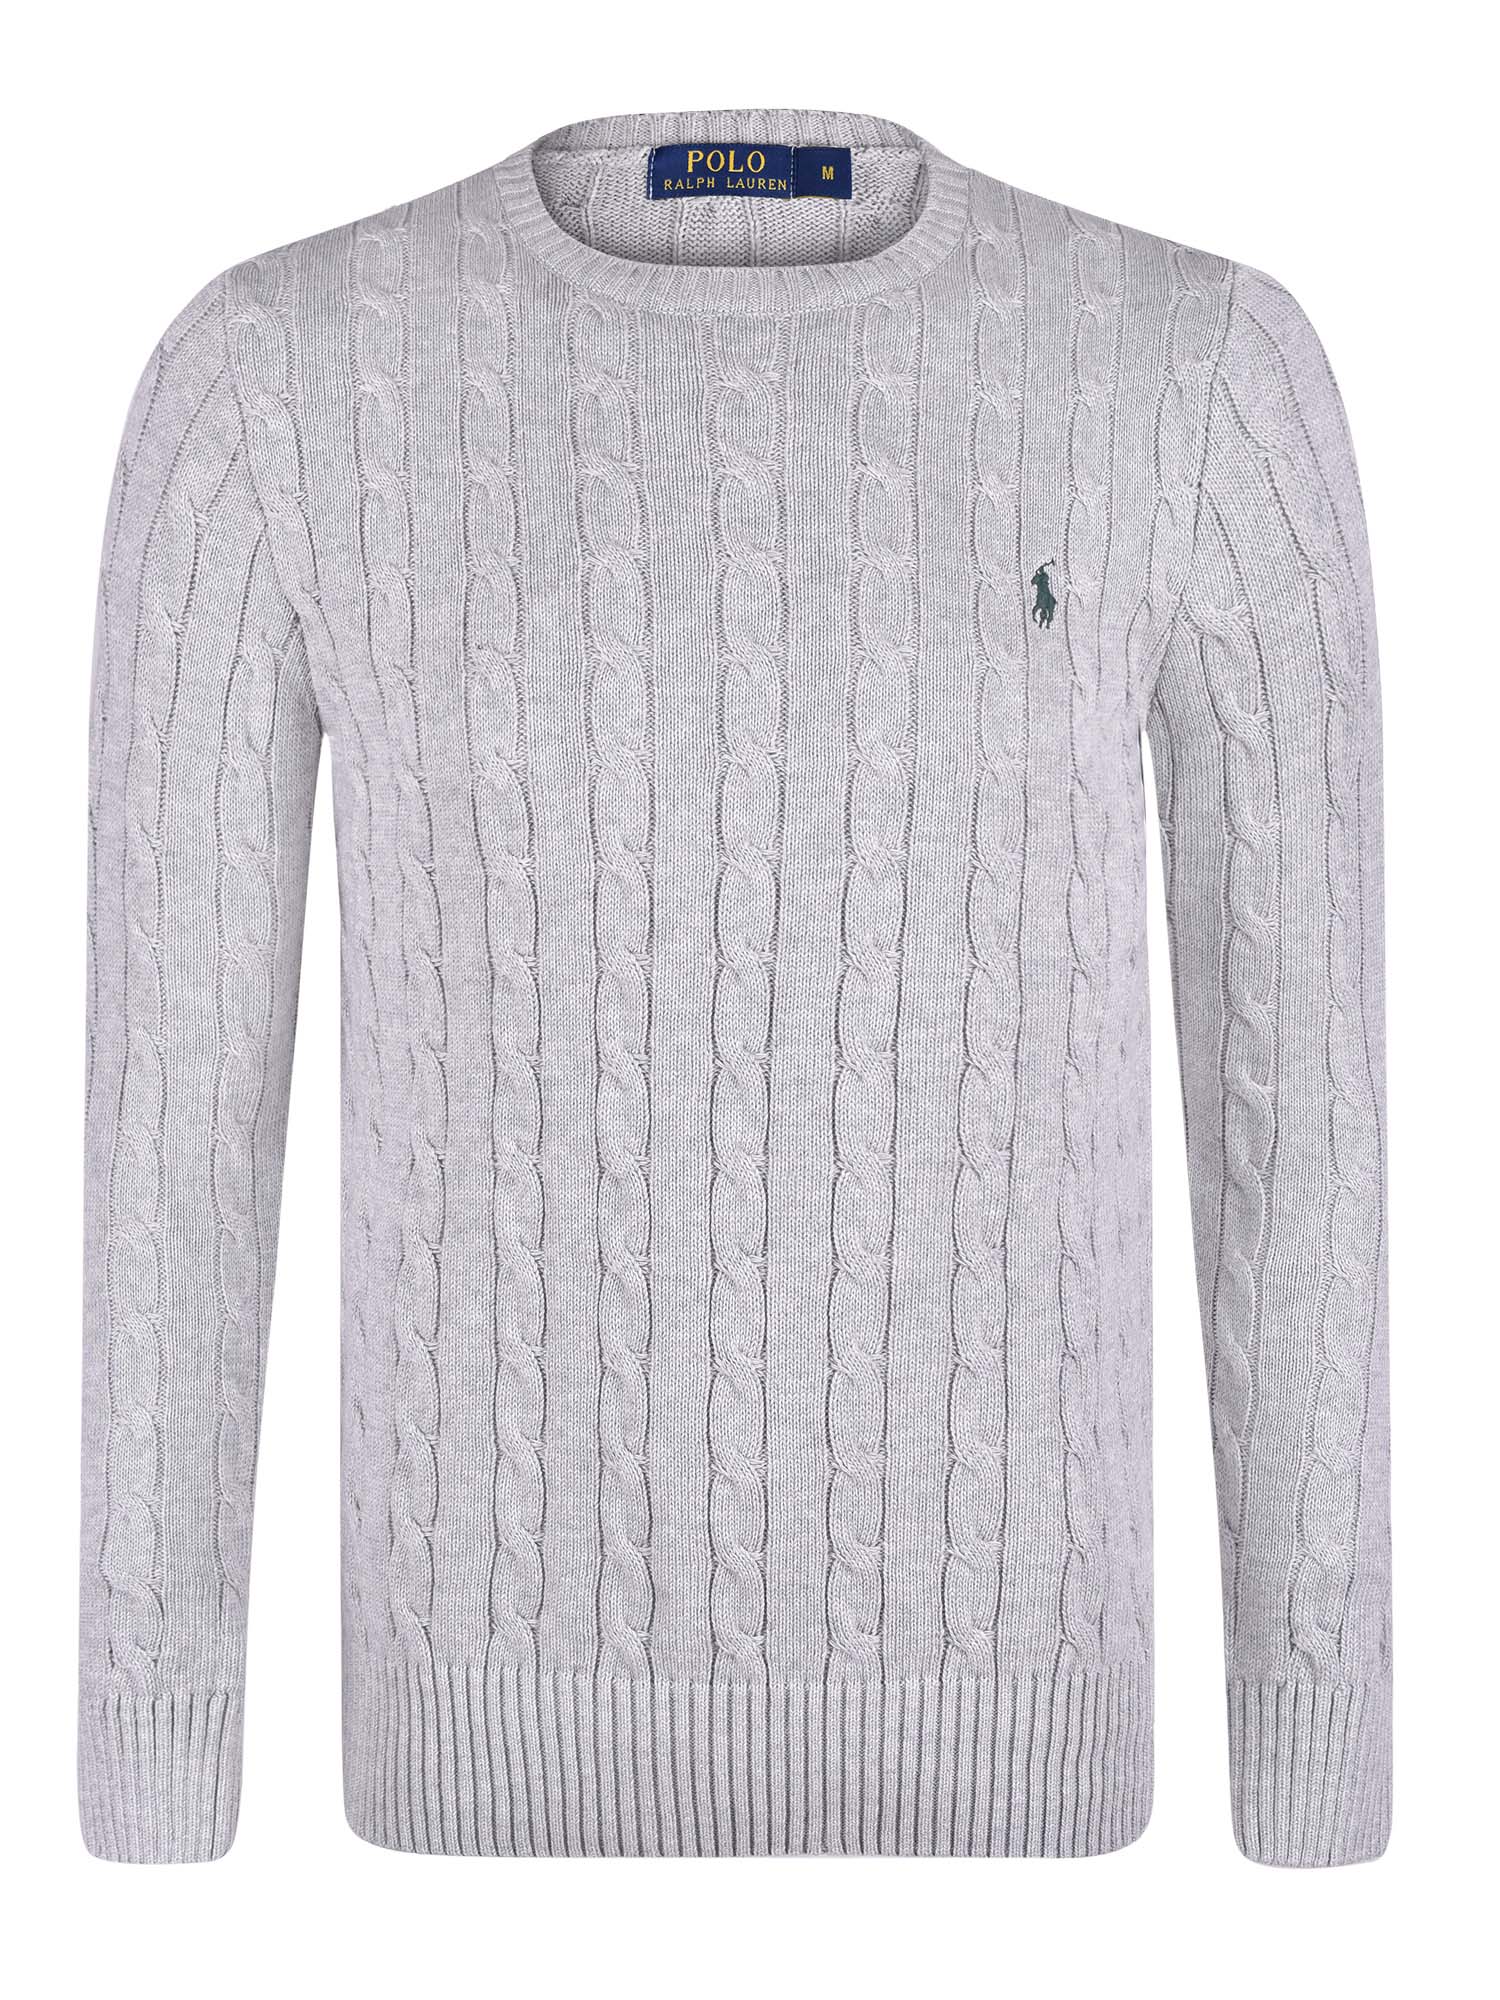 vogn auroch ødemark Polo Ralph Lauren Cable Knit Pullover - Grey - Outlet Fashion